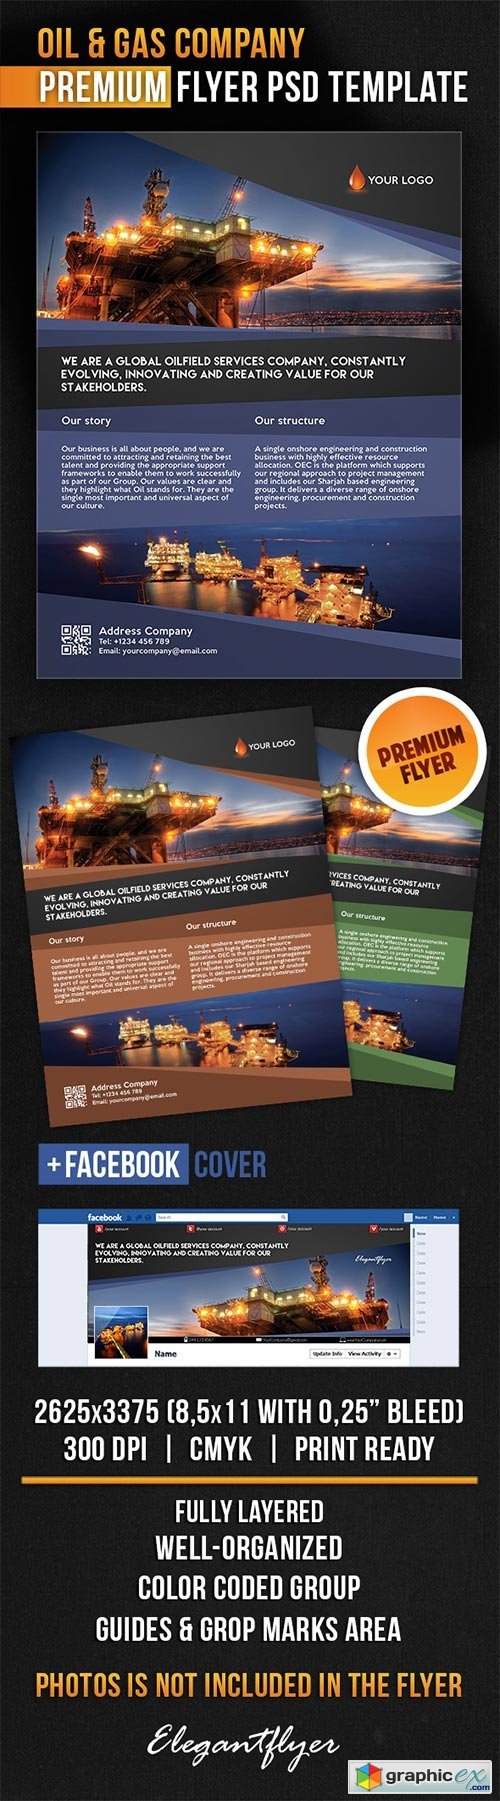 Oil & Gas Company Flyer PSD Template + Facebook Cover